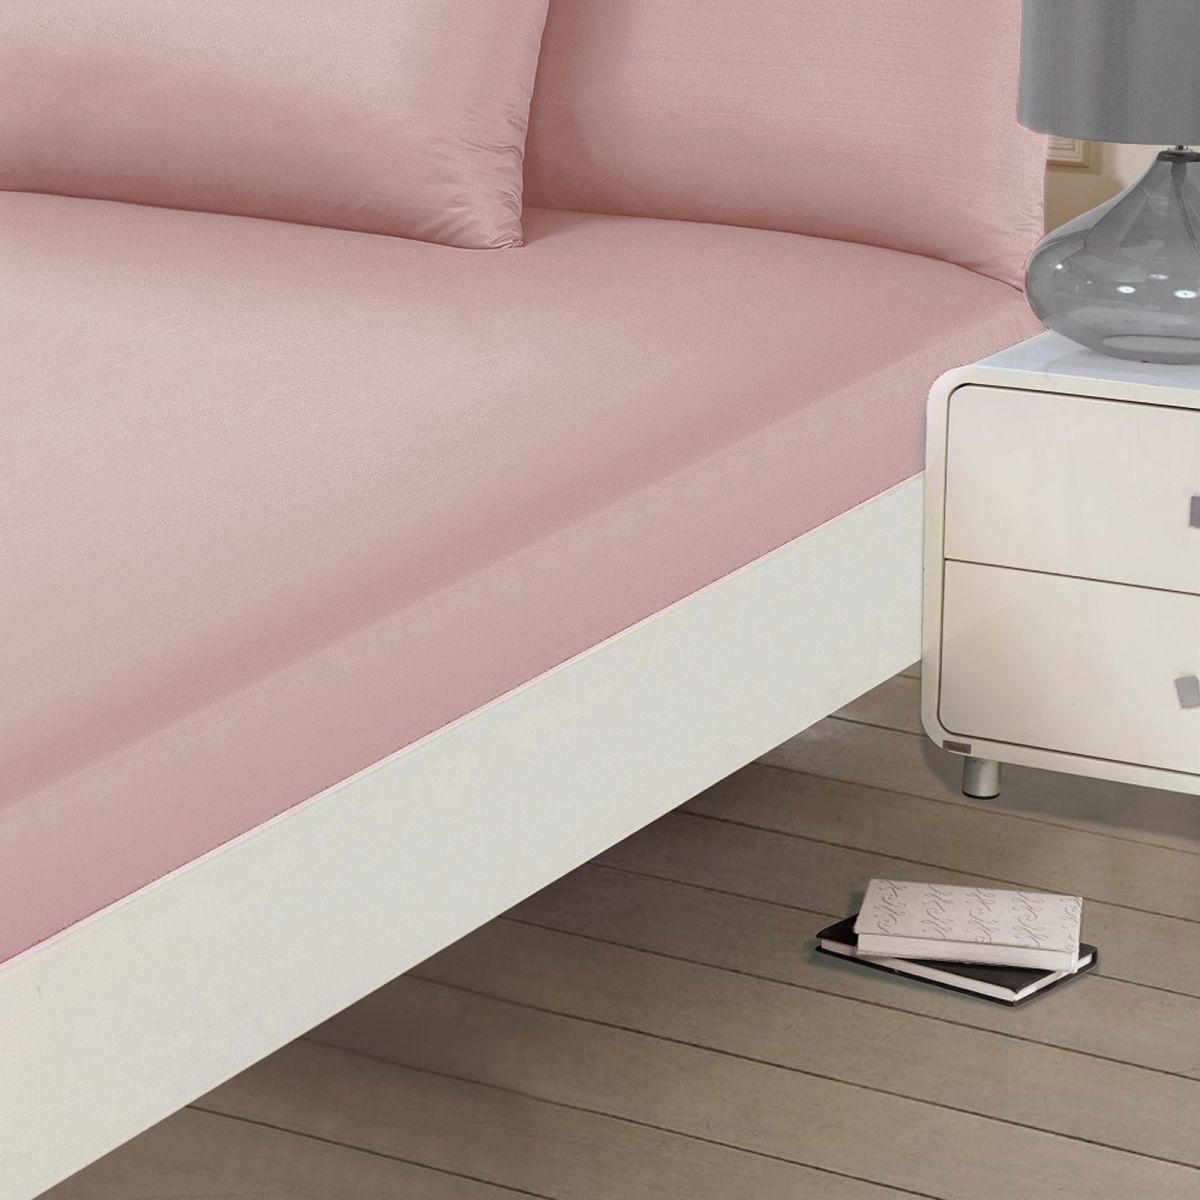 Brentfords Plain Fitted Bed Sheet - Blush Pink